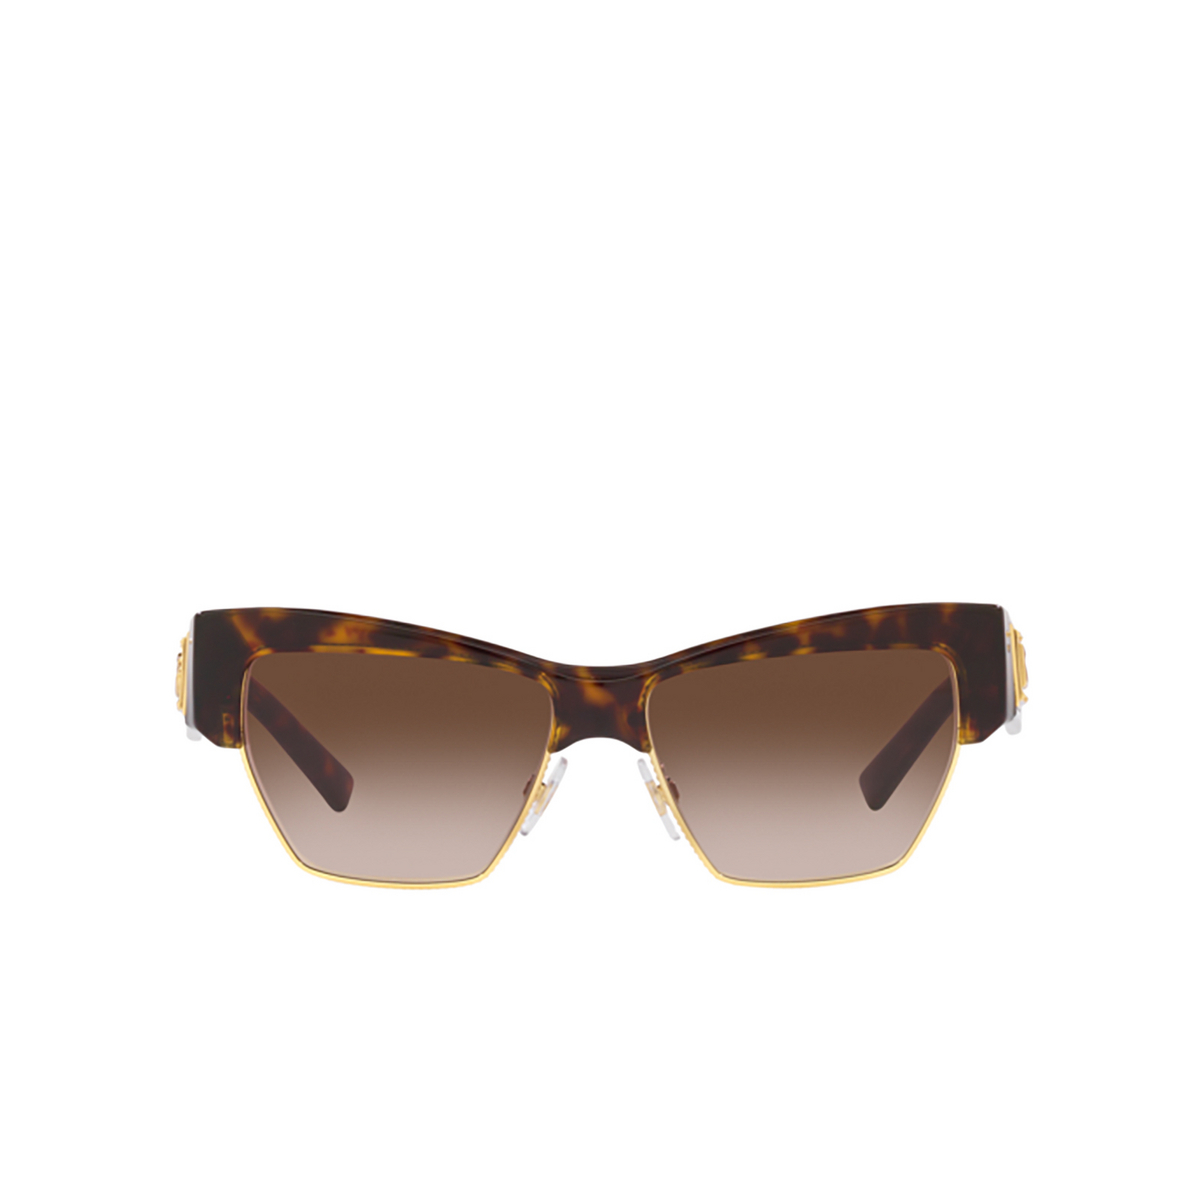 Dolce & Gabbana DG4415 Sunglasses 502/13 Havana - front view